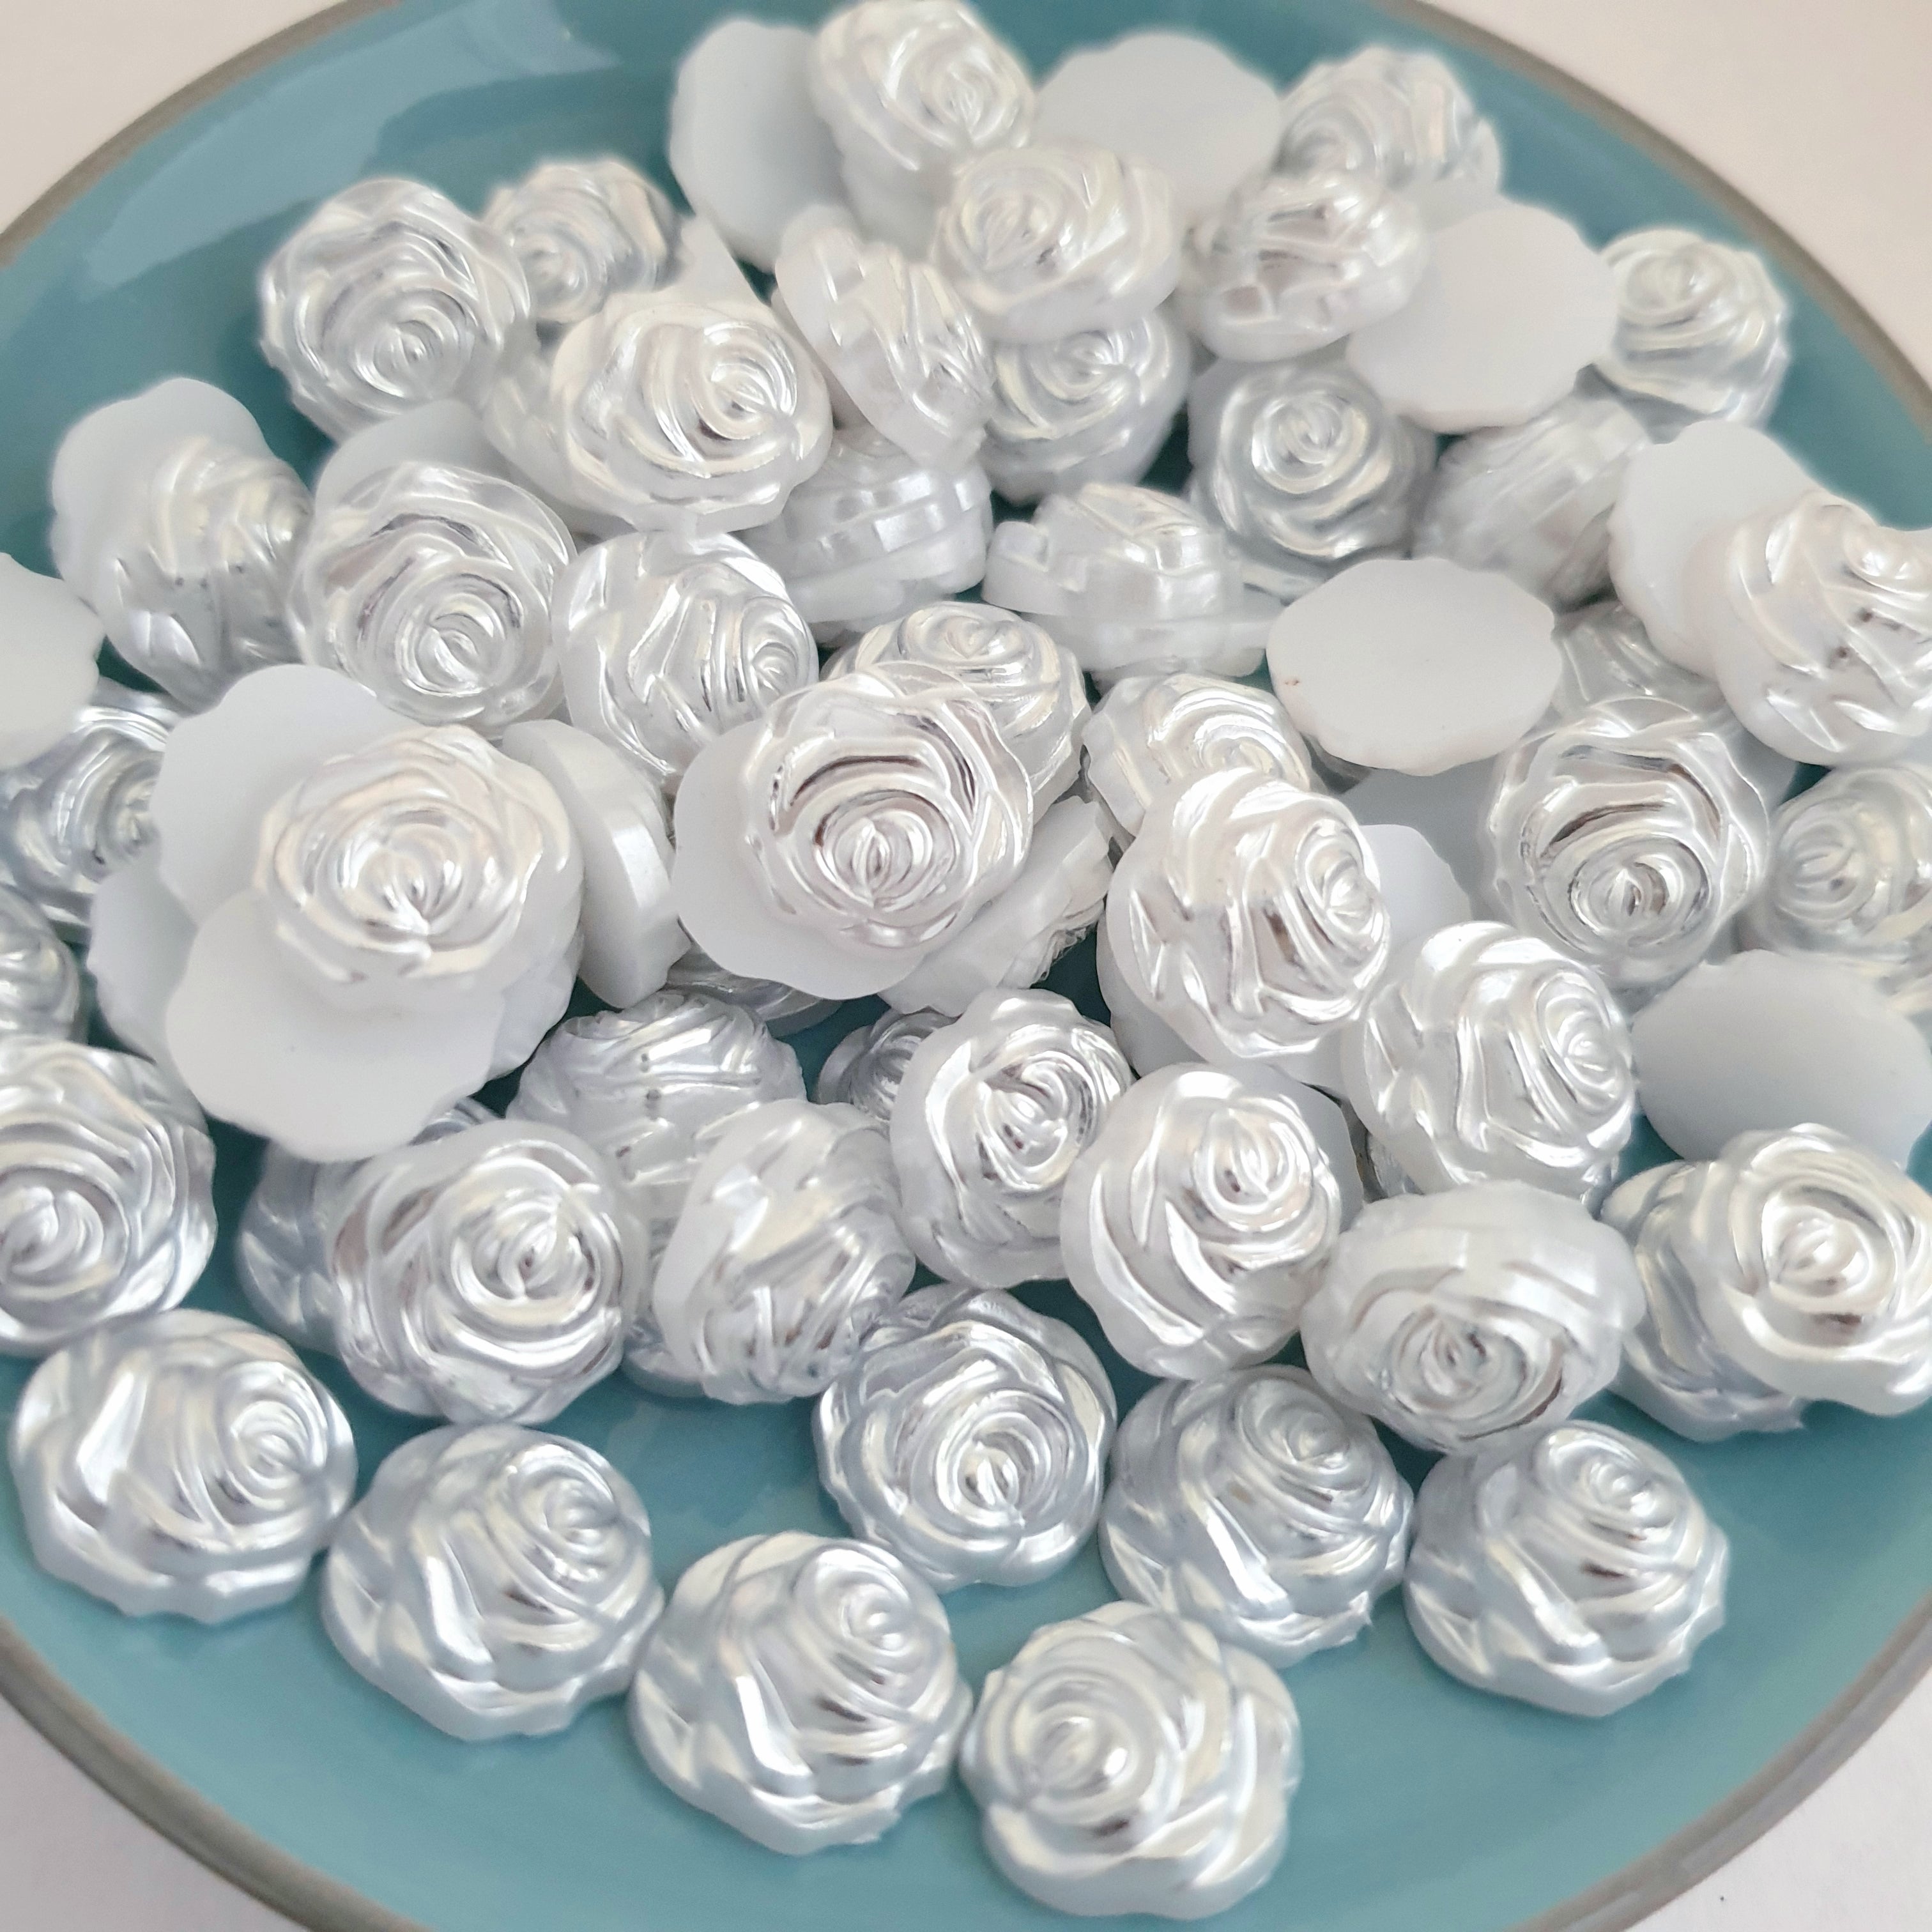 MajorCrafts 60pcs 12mm Silver White Flat Back Rose Flower Resin Pearls